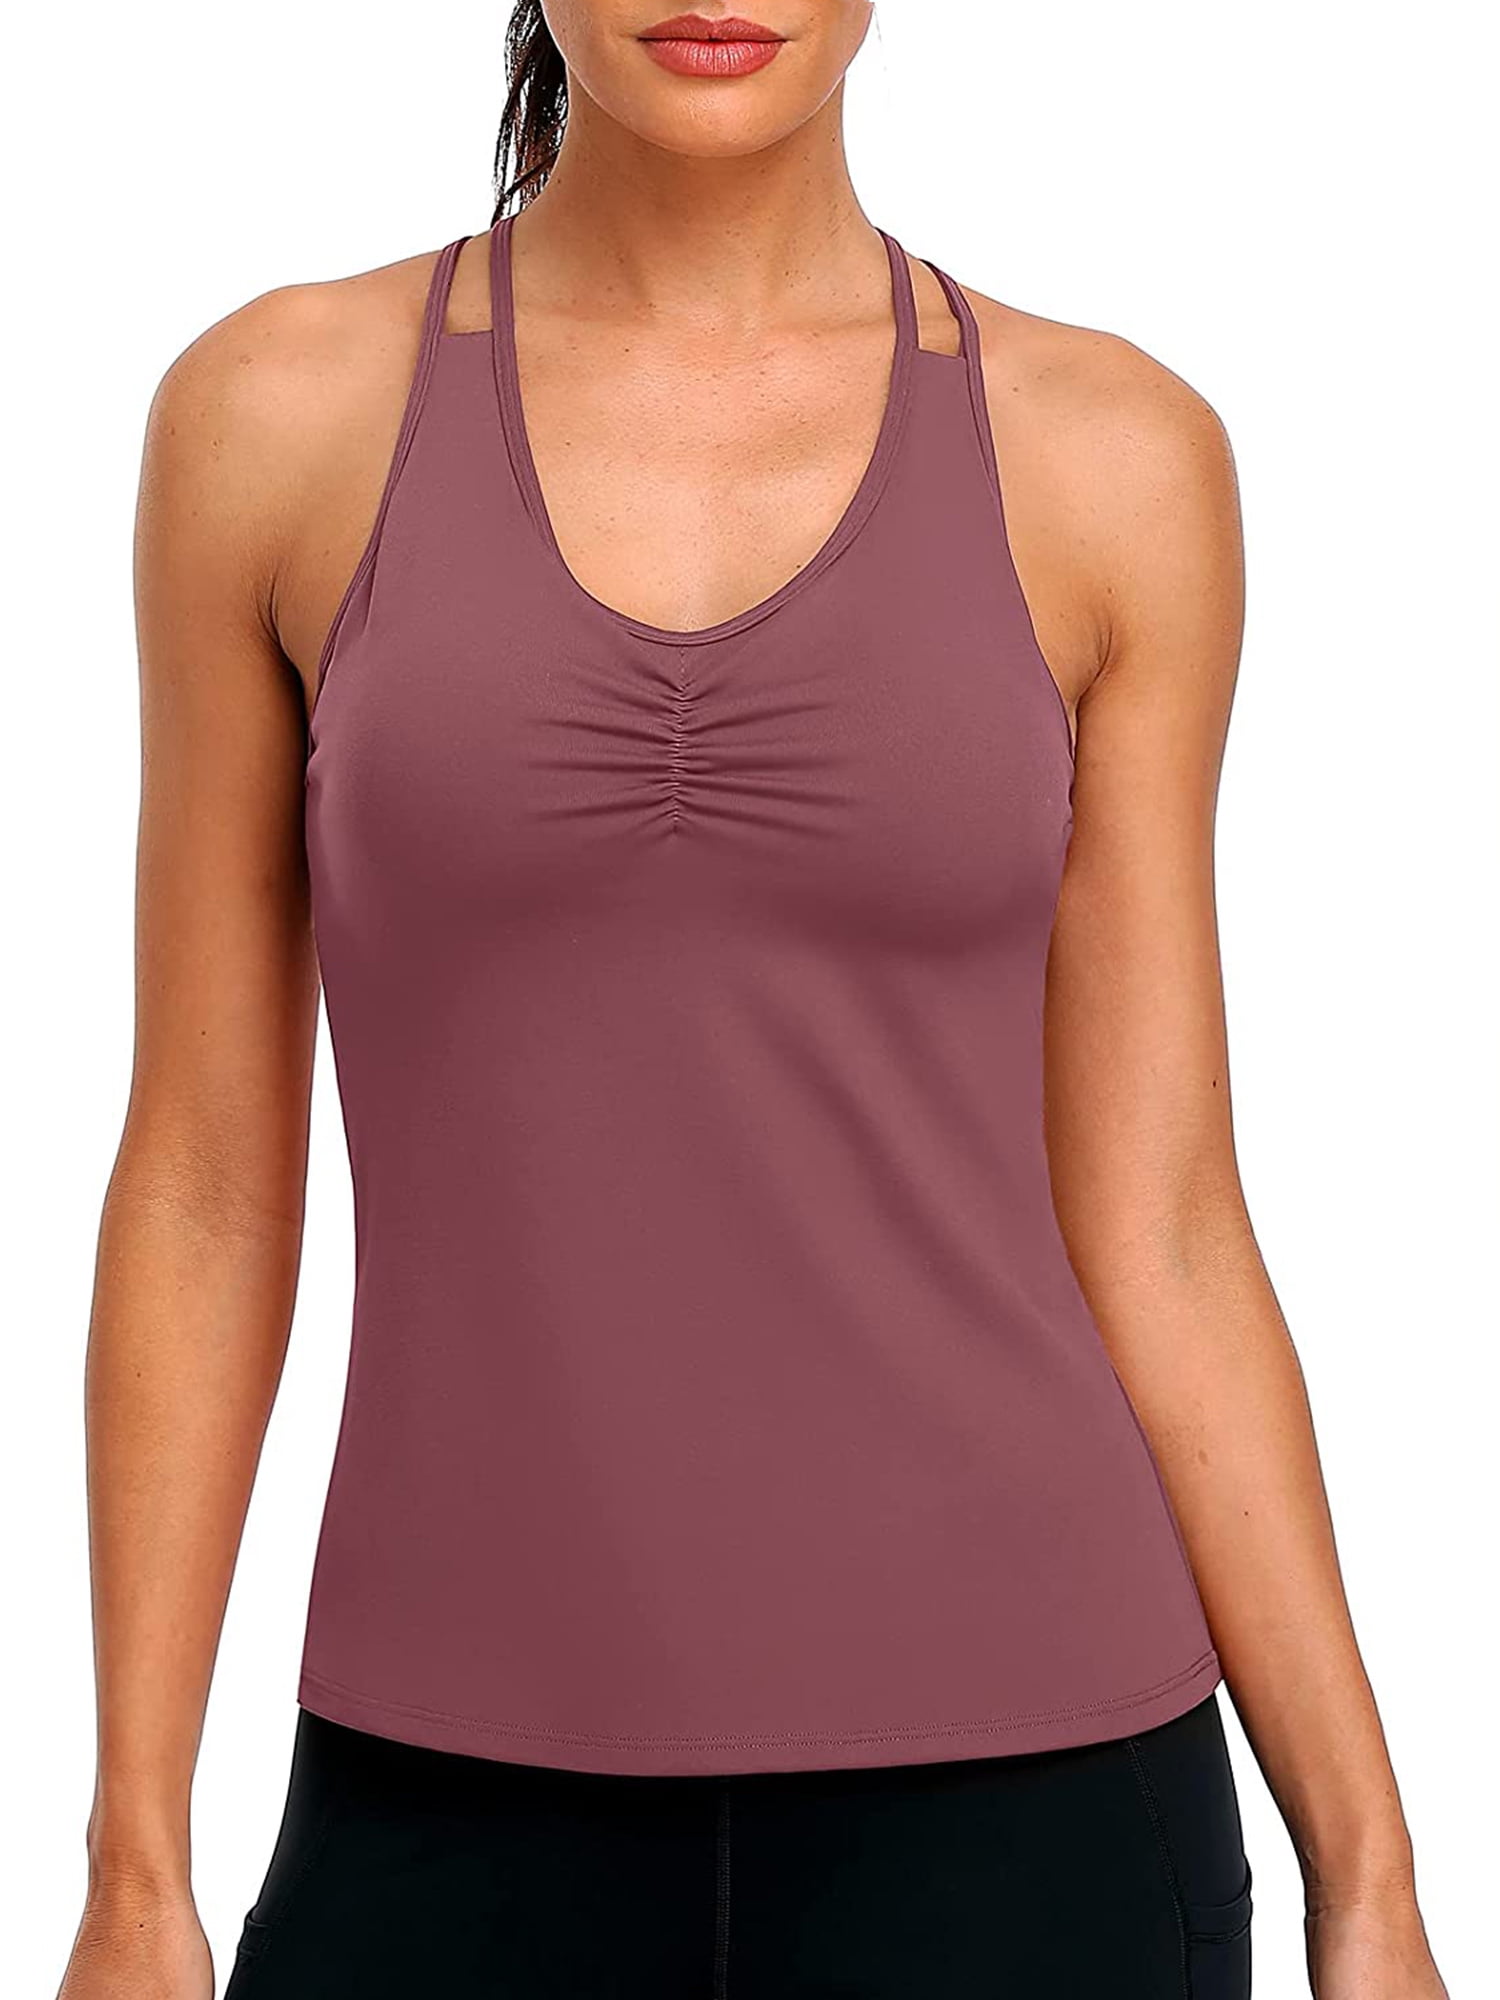 Women's Low Cut Cross Back Yoga Tank Top With Shelf Bra Stretch Atheltic  Tank Shirts 